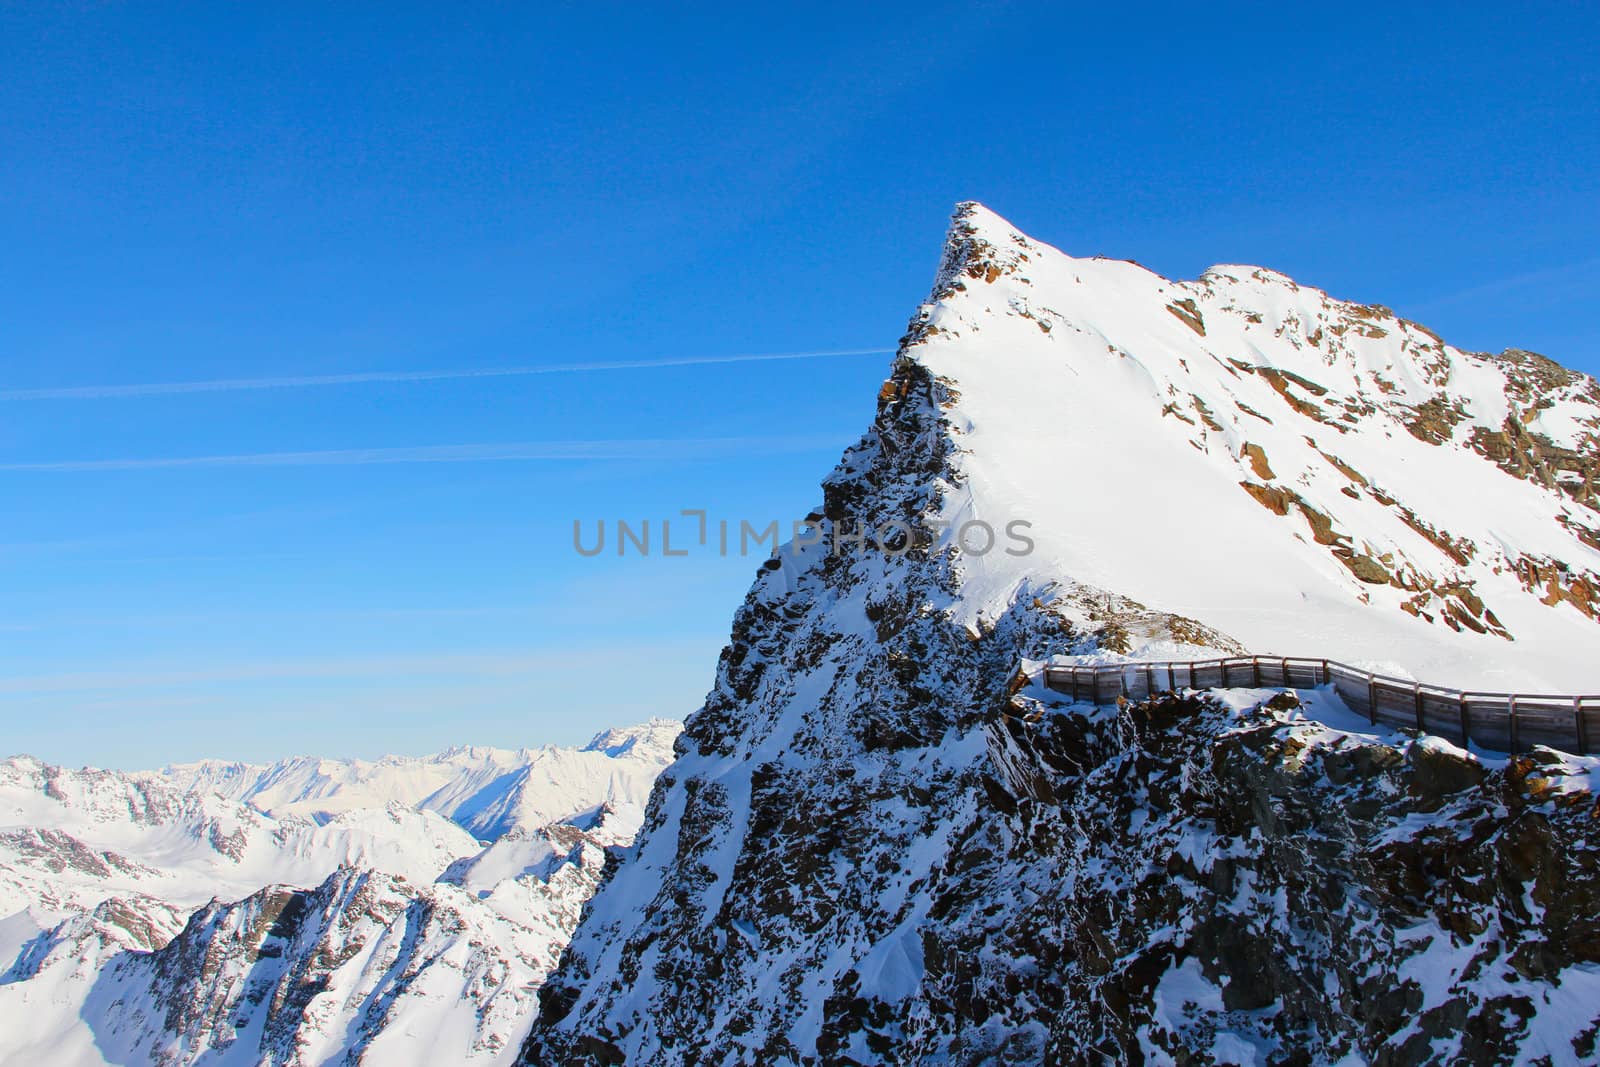 High mountains under blue sky beautiful winter panorama